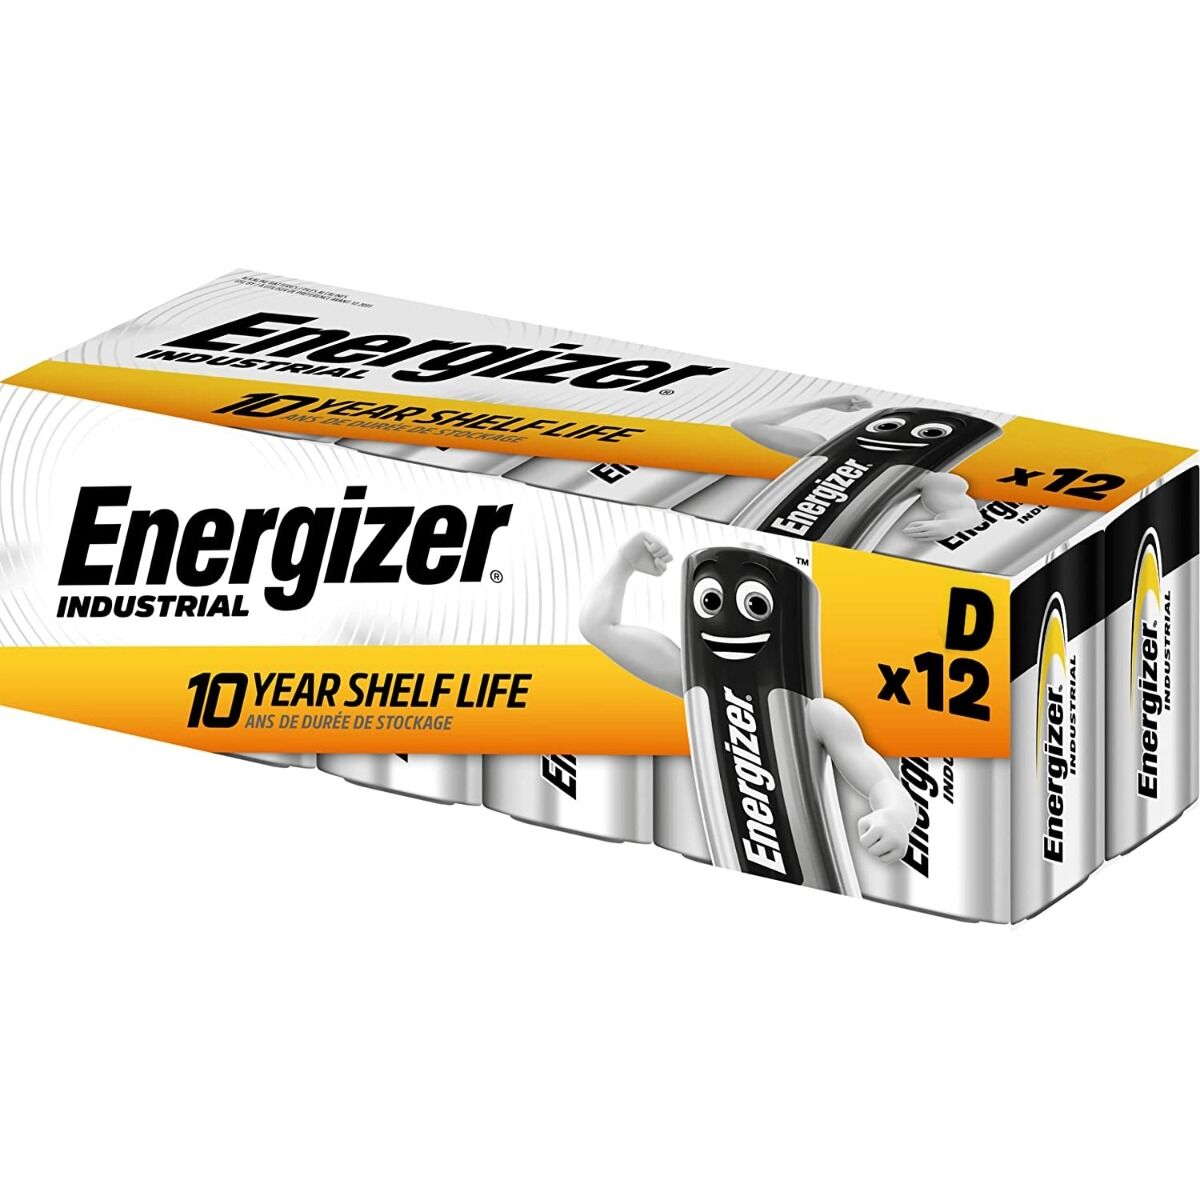 Energizer Industrial LR20 D Batteries (Box of 12)